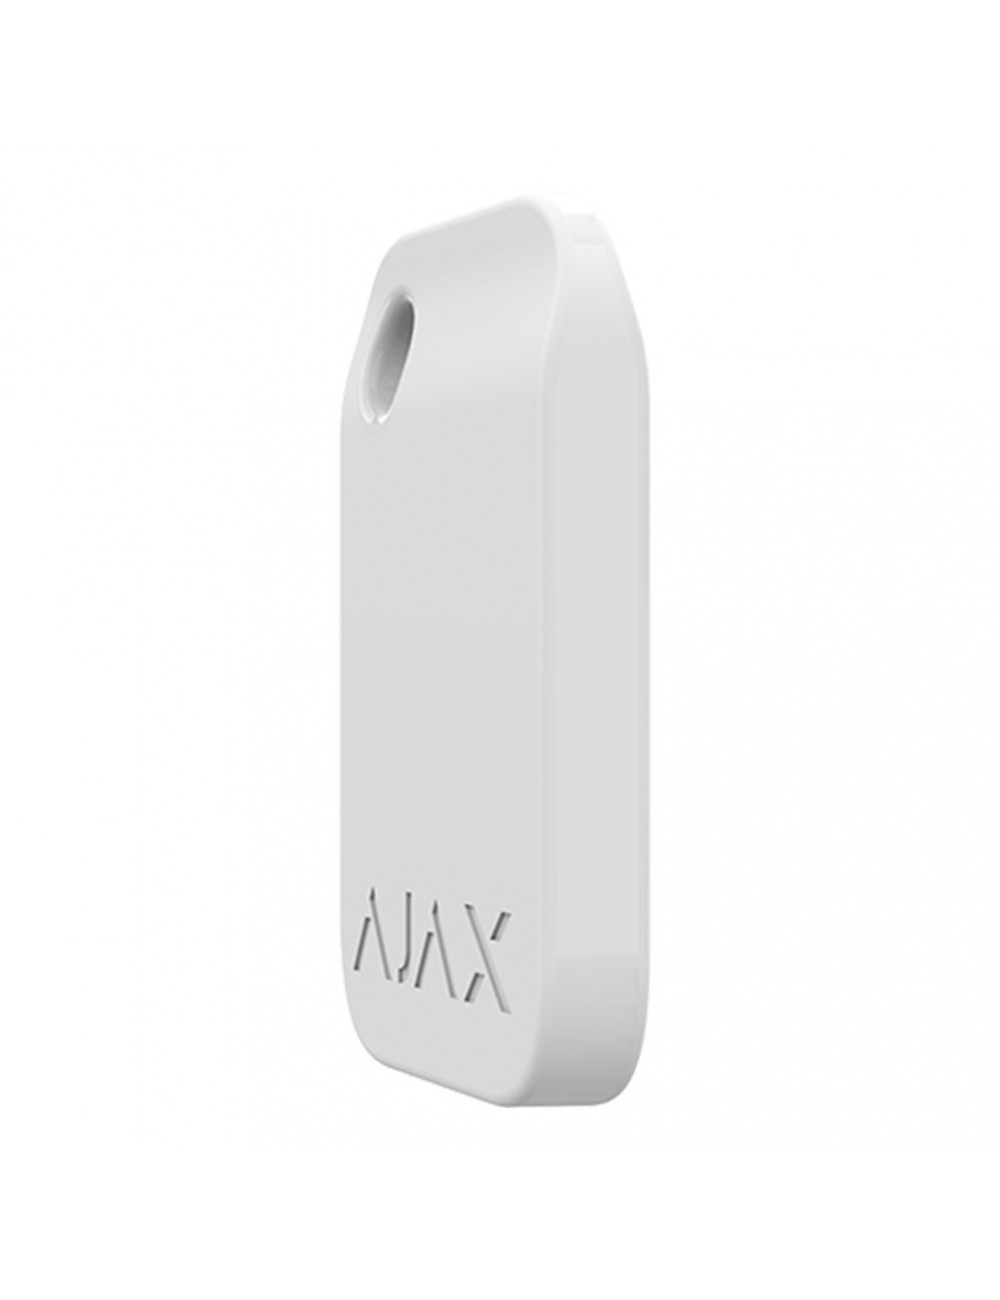 Ajax Tag Porte-clés Sans Contact Crypté